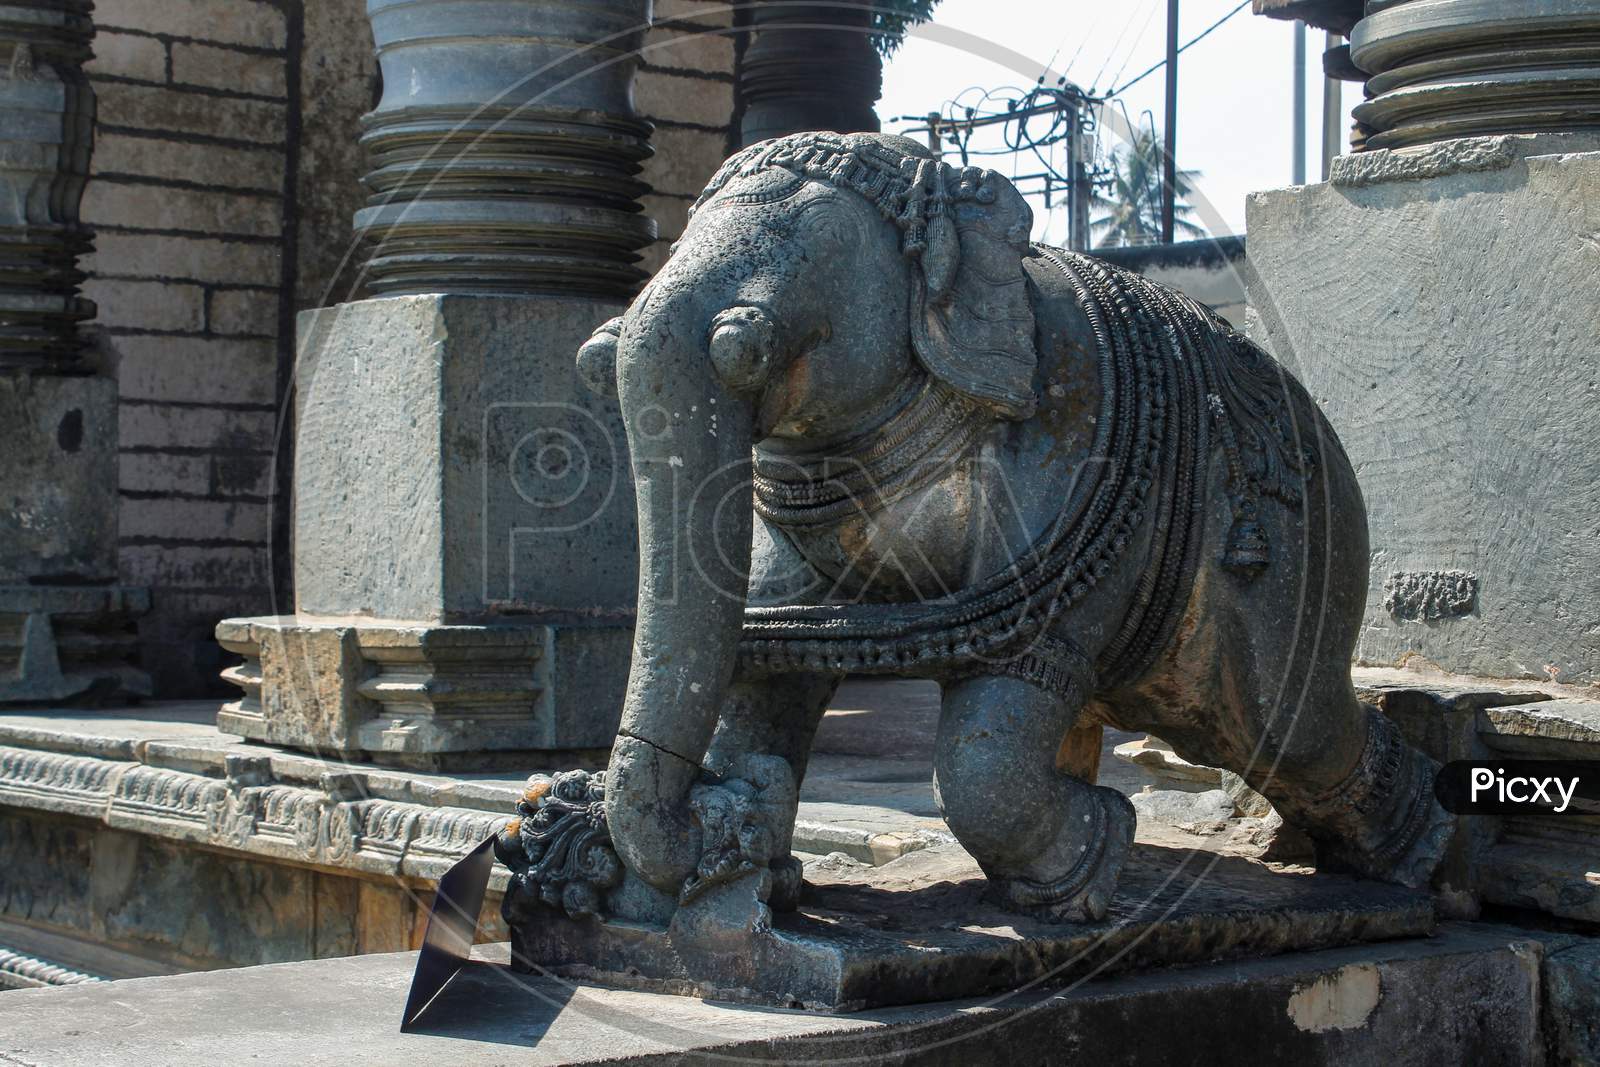 spellbounding vijayapura architecture at belur chennakeshava temple